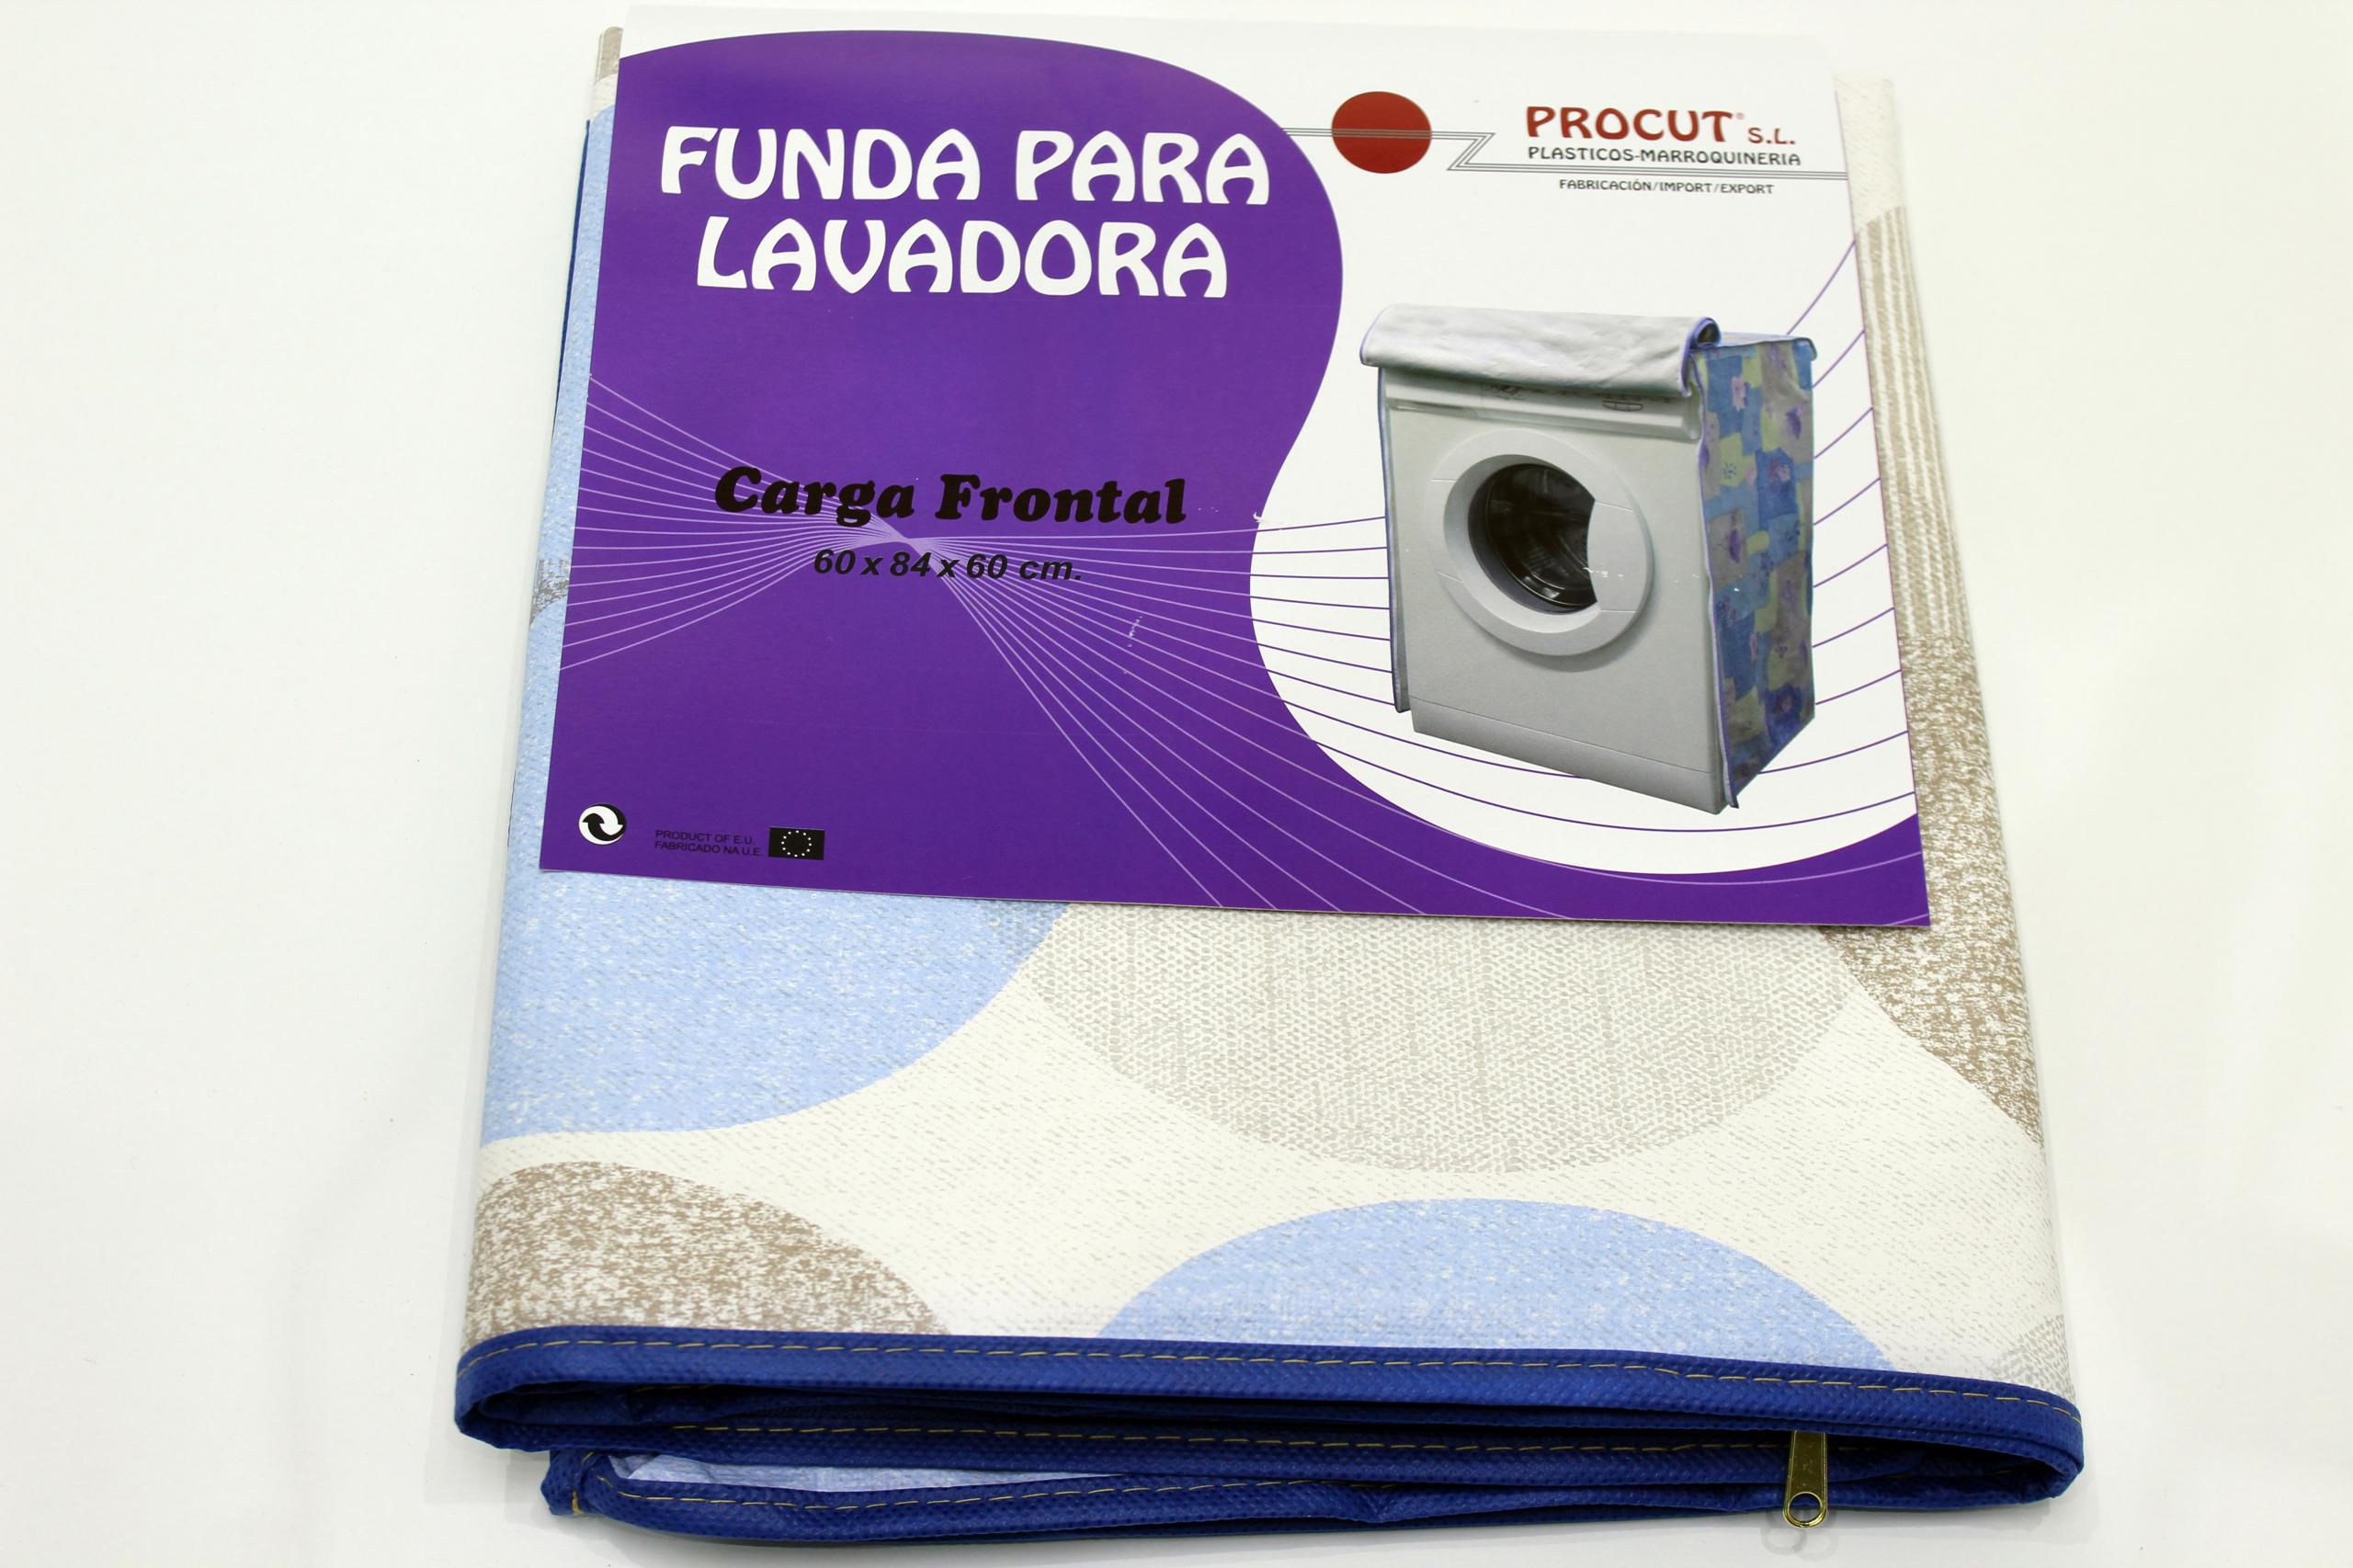 FUNDA LAVADORA ECOTEX C/FRONTAL en PROCUT S.L. - FUNDAS VARIAS